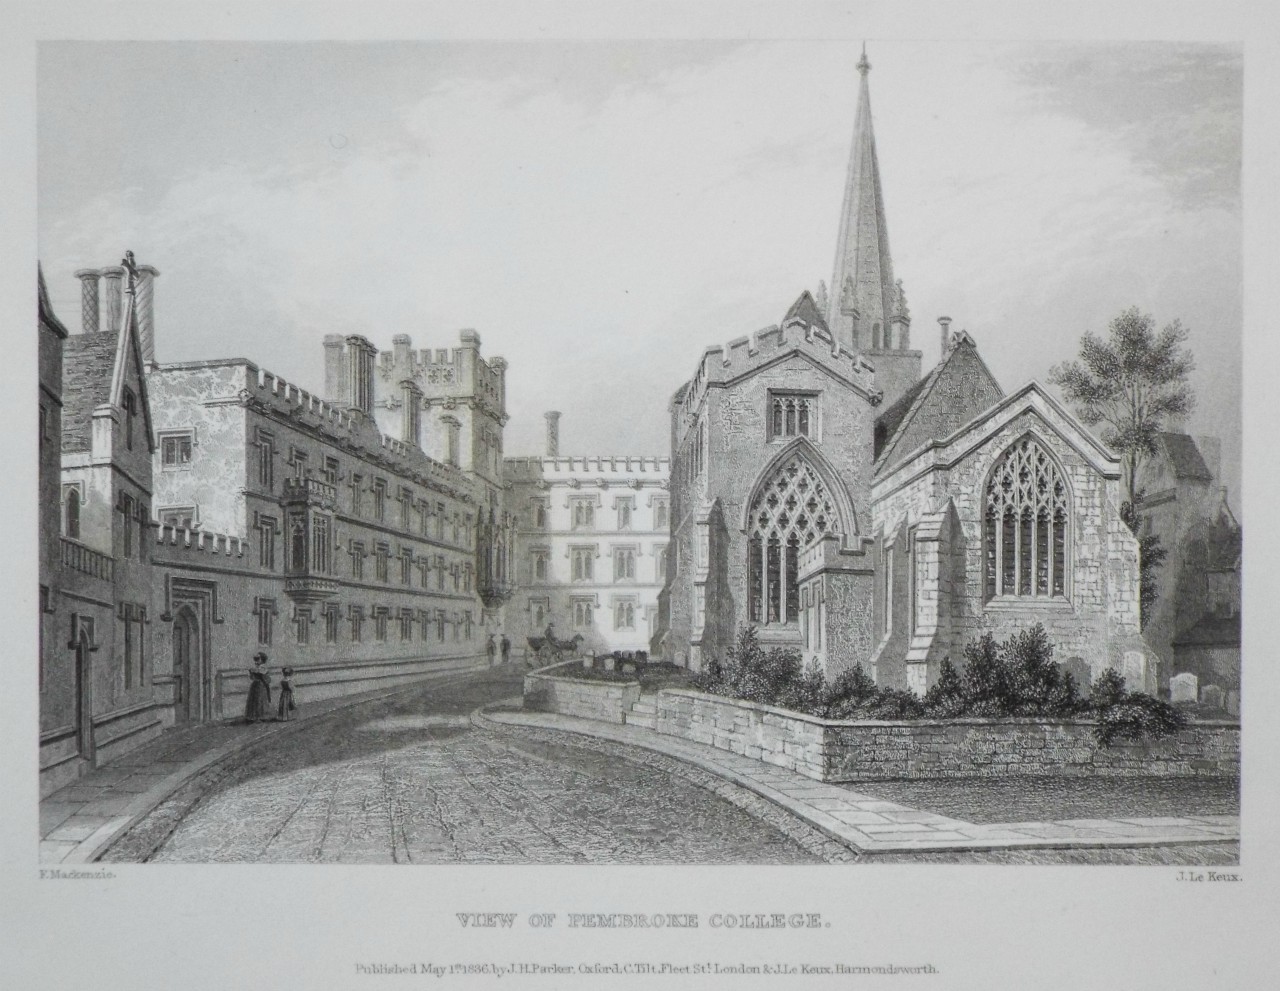 Print - View of Pembroke College. - Le